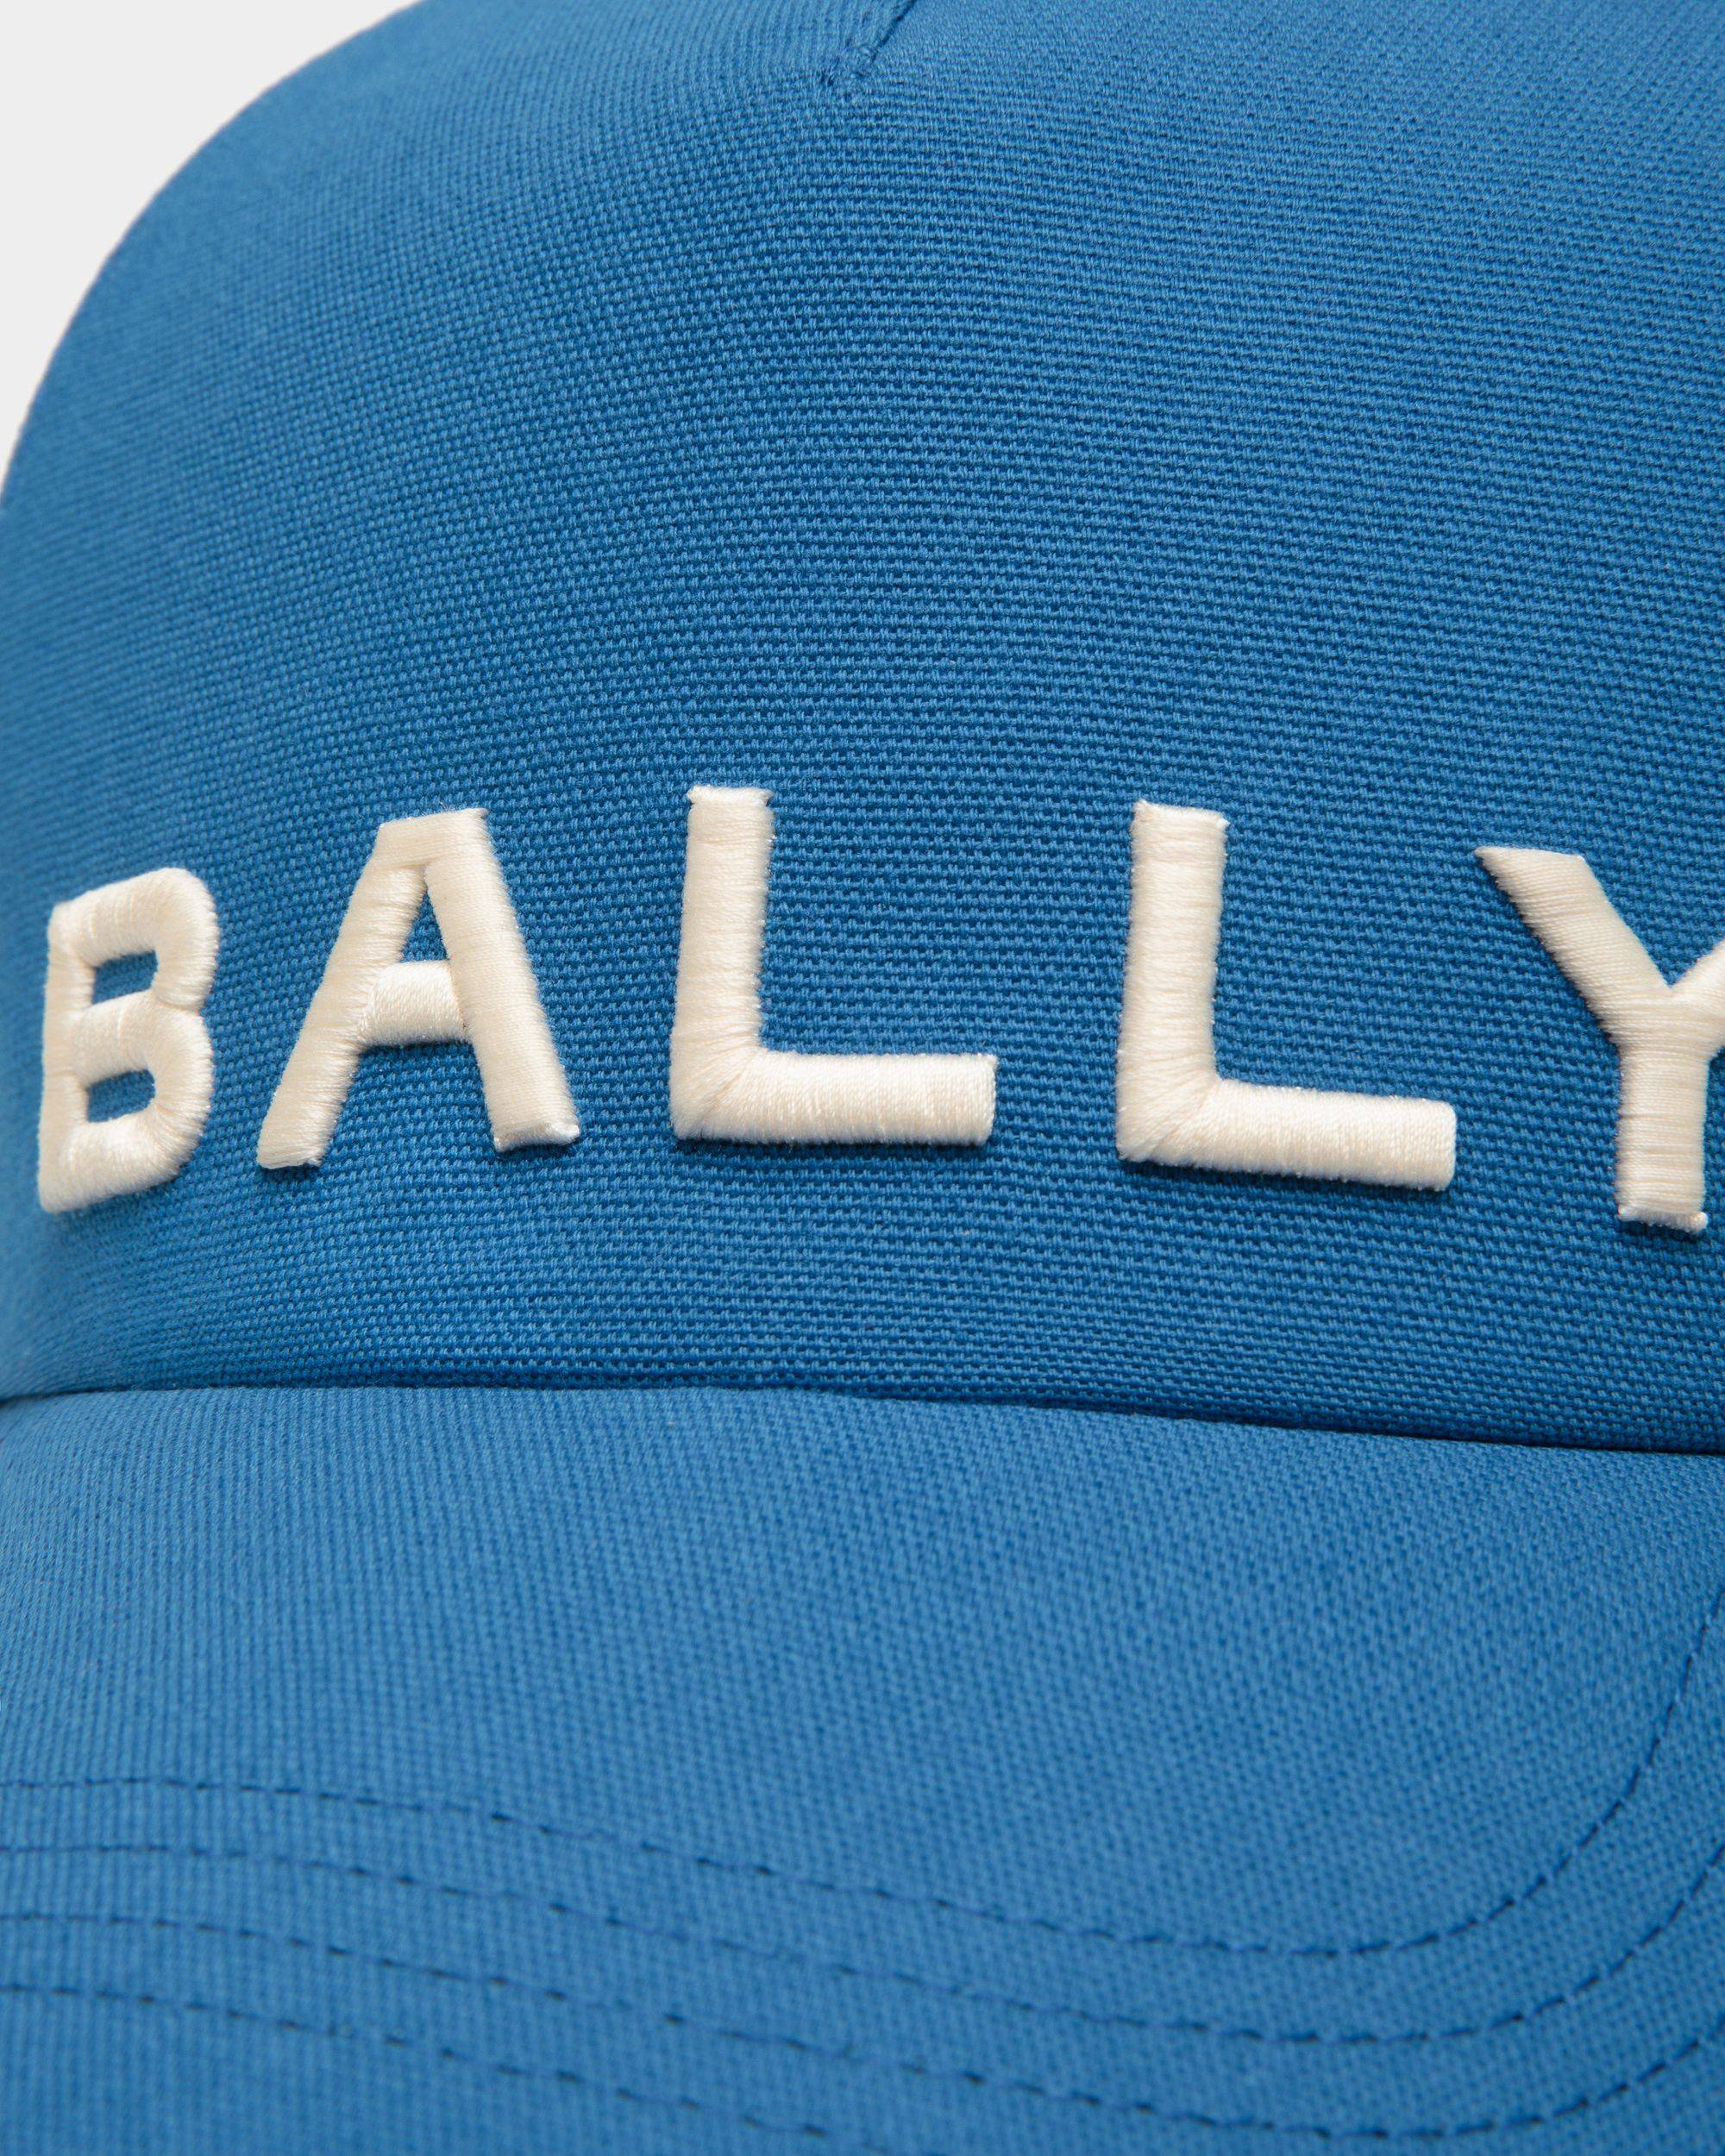 Men's Baseball Hat in Blue Cotton | Bally | Still Life Detail